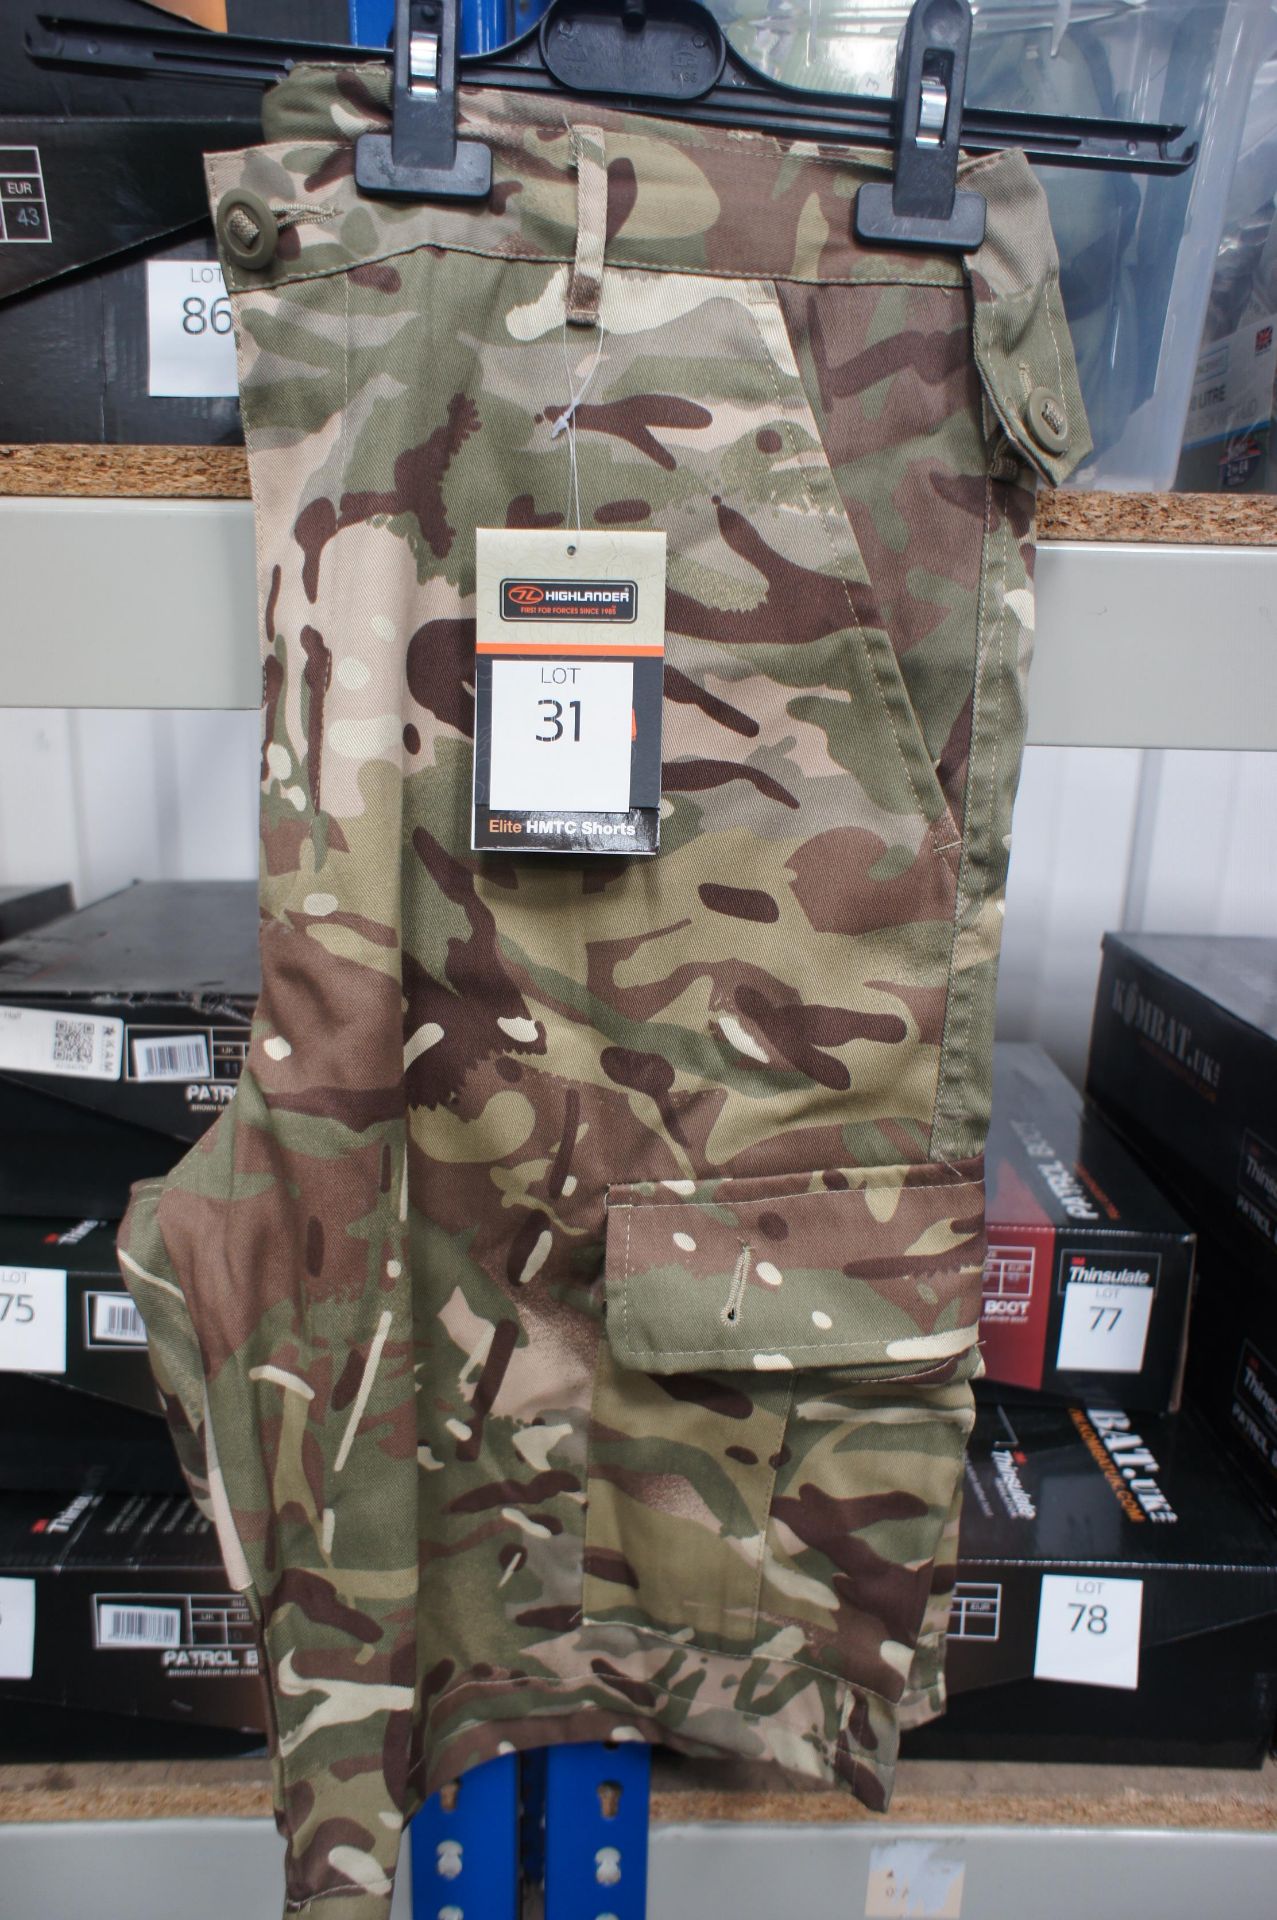 Highlander Elite Camo Shorts 36R Rrp. £19.99 - Image 2 of 2